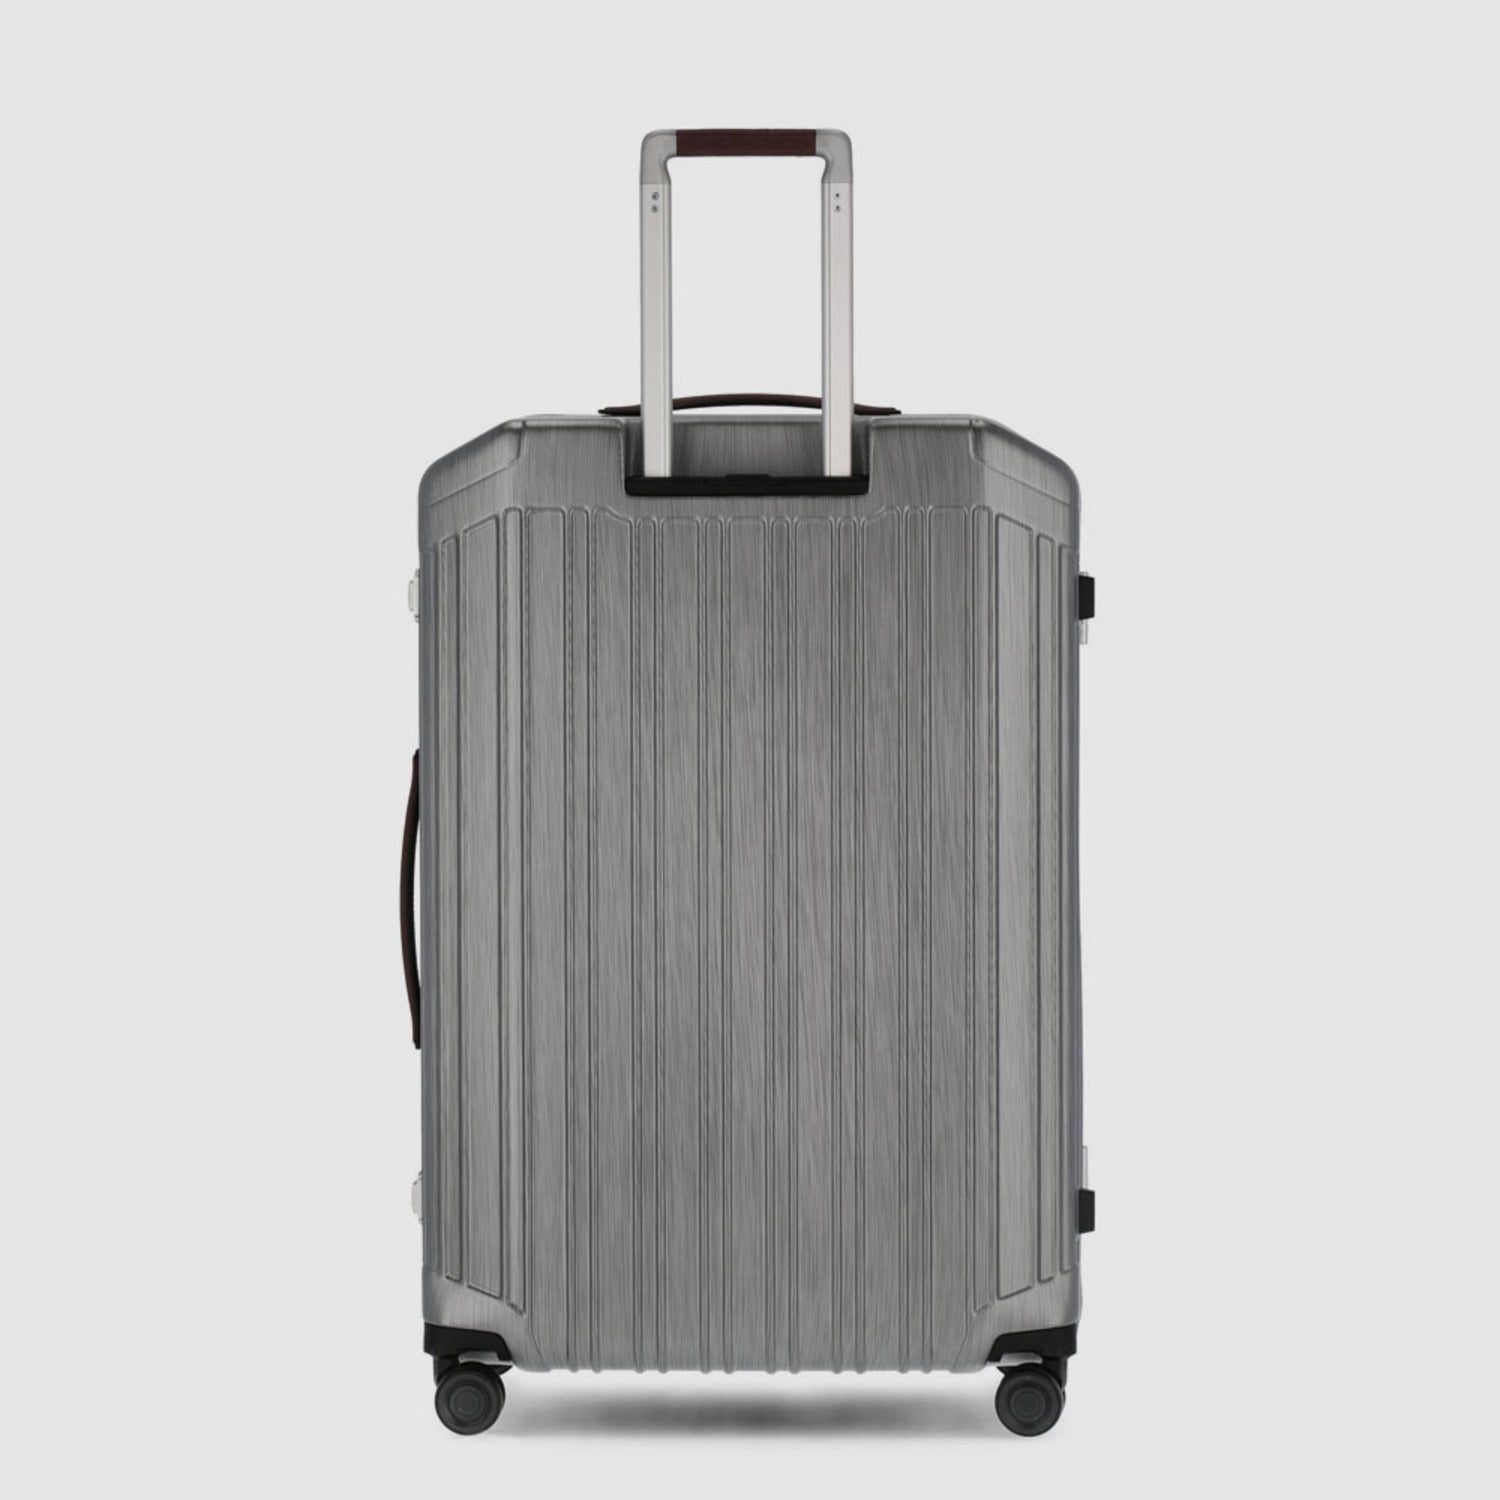 Piquadro Pqlm-Frame 75Cm Hardcase Large Check-In Luggage Trolley Black / Light Brown - Bv4428Pqlm/Ncu